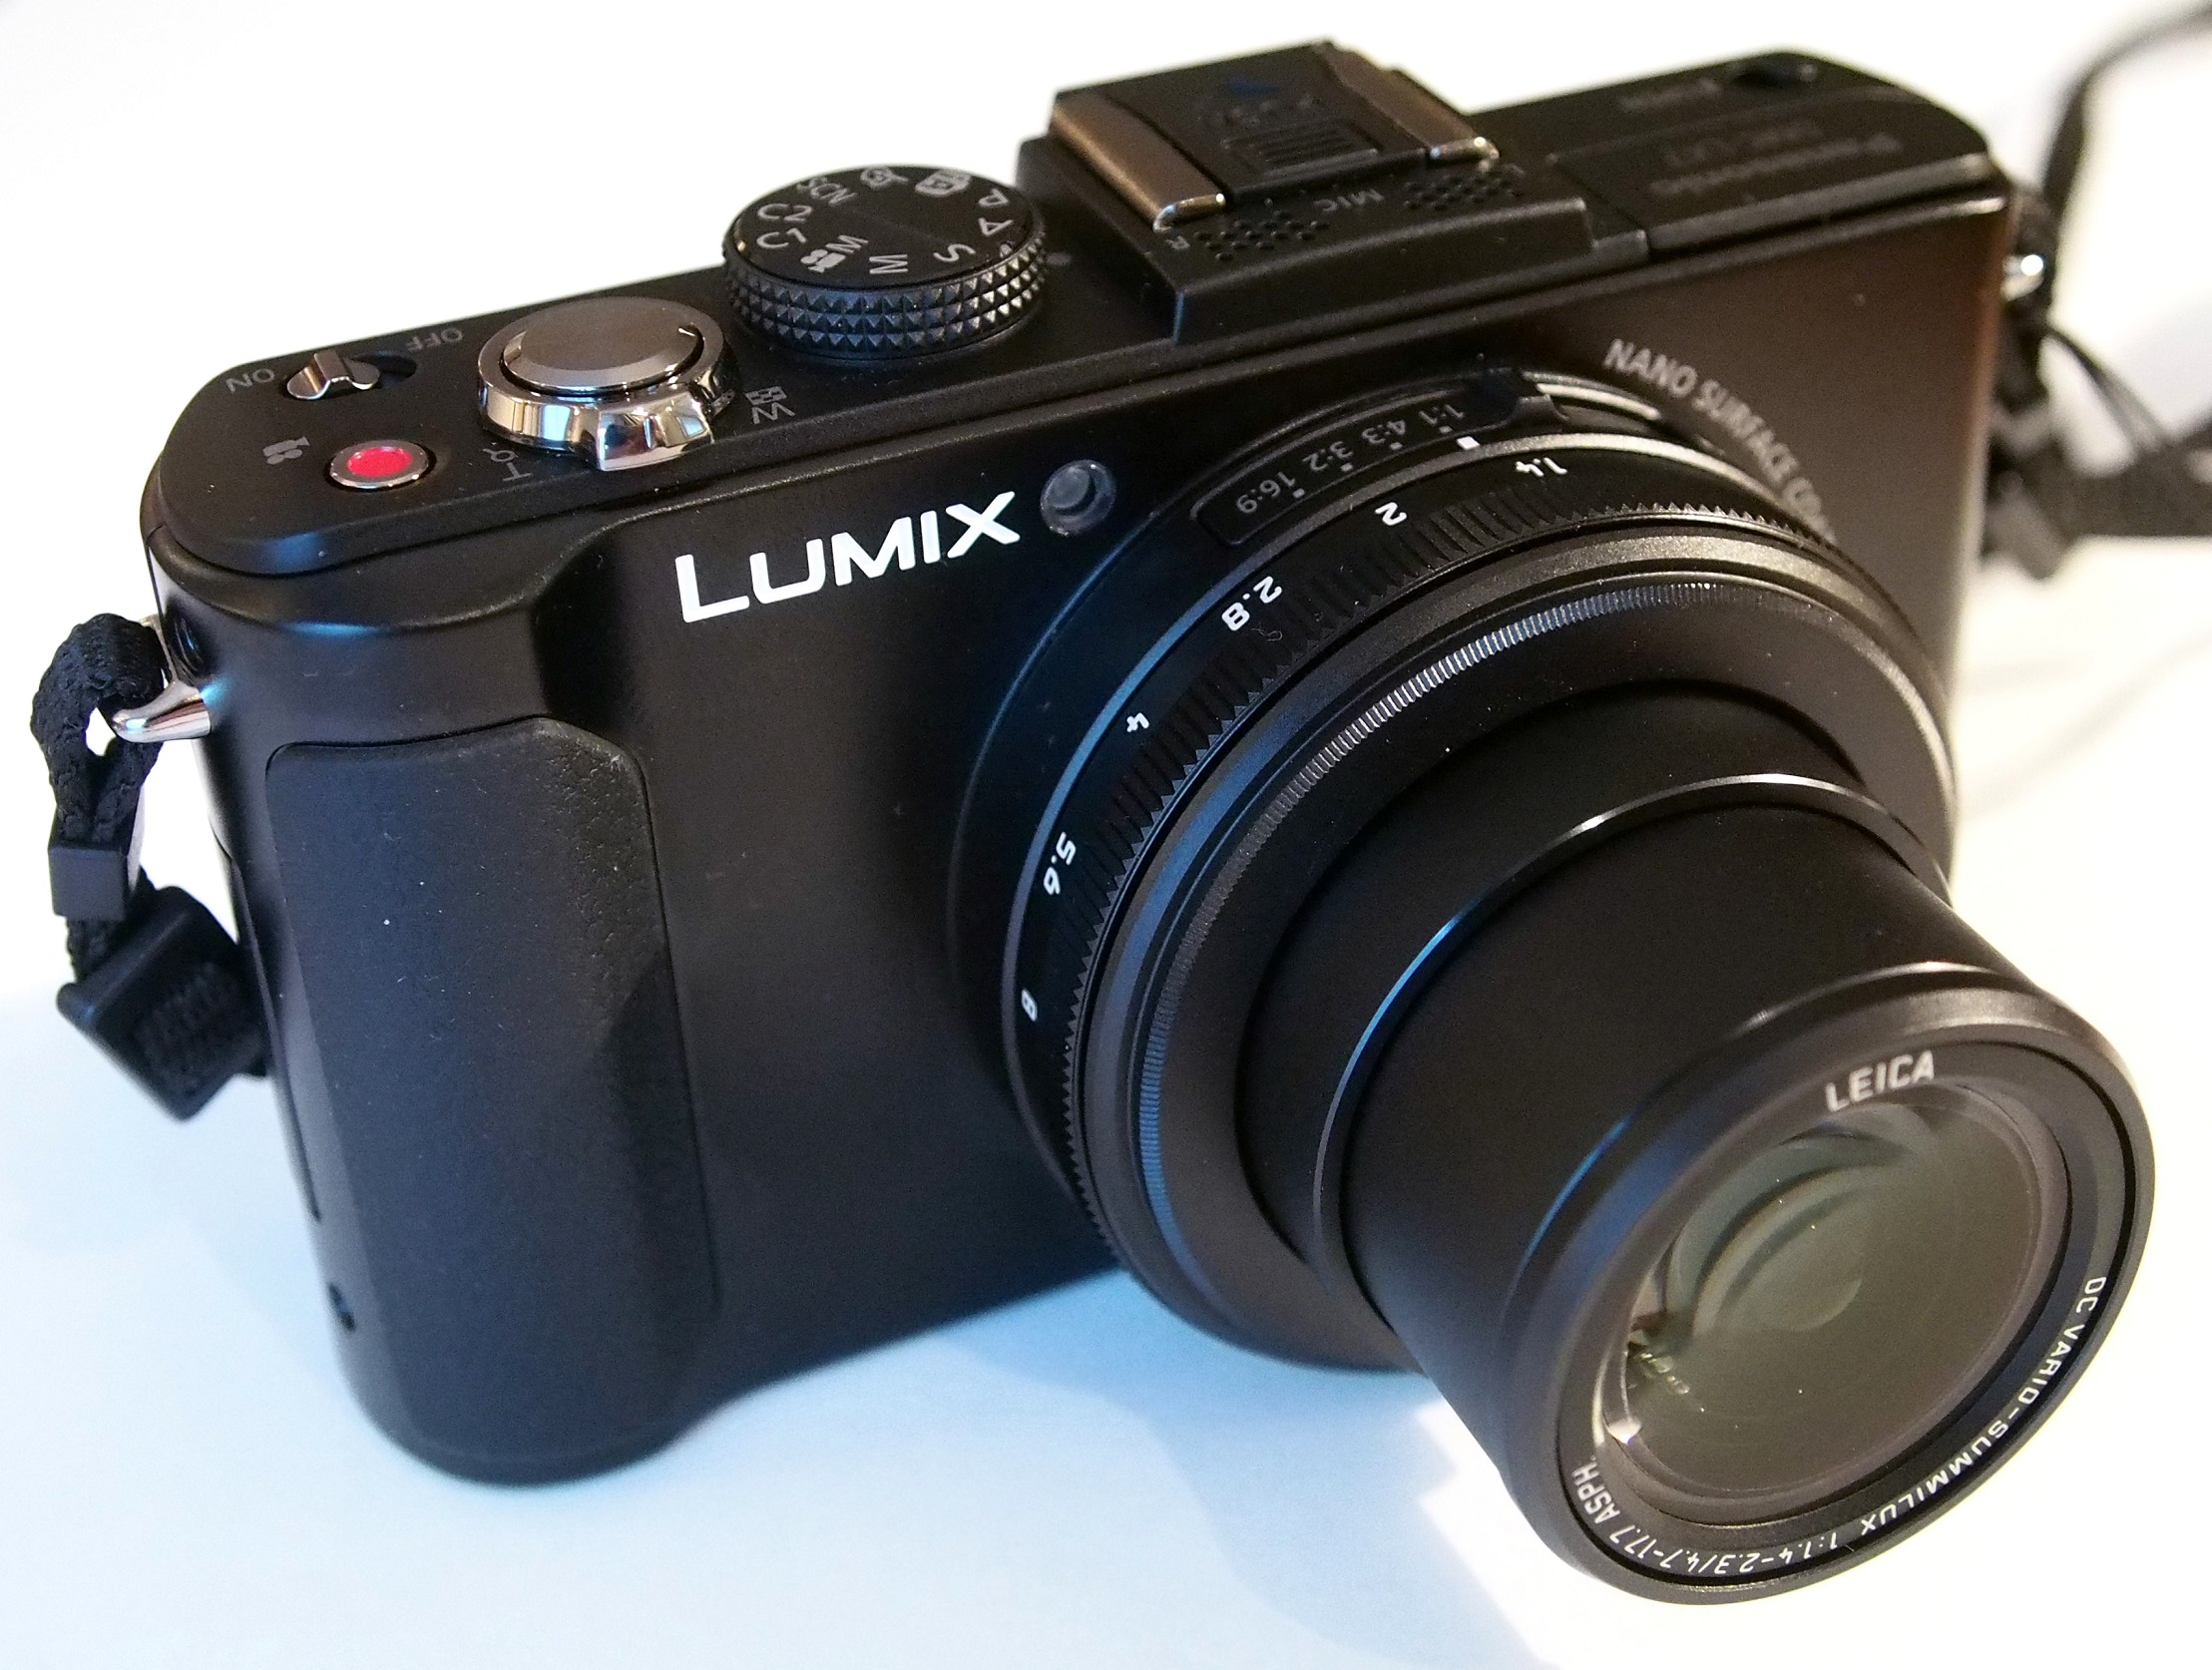 Panasonic Lumix DMC-LX7 Hands-On Review